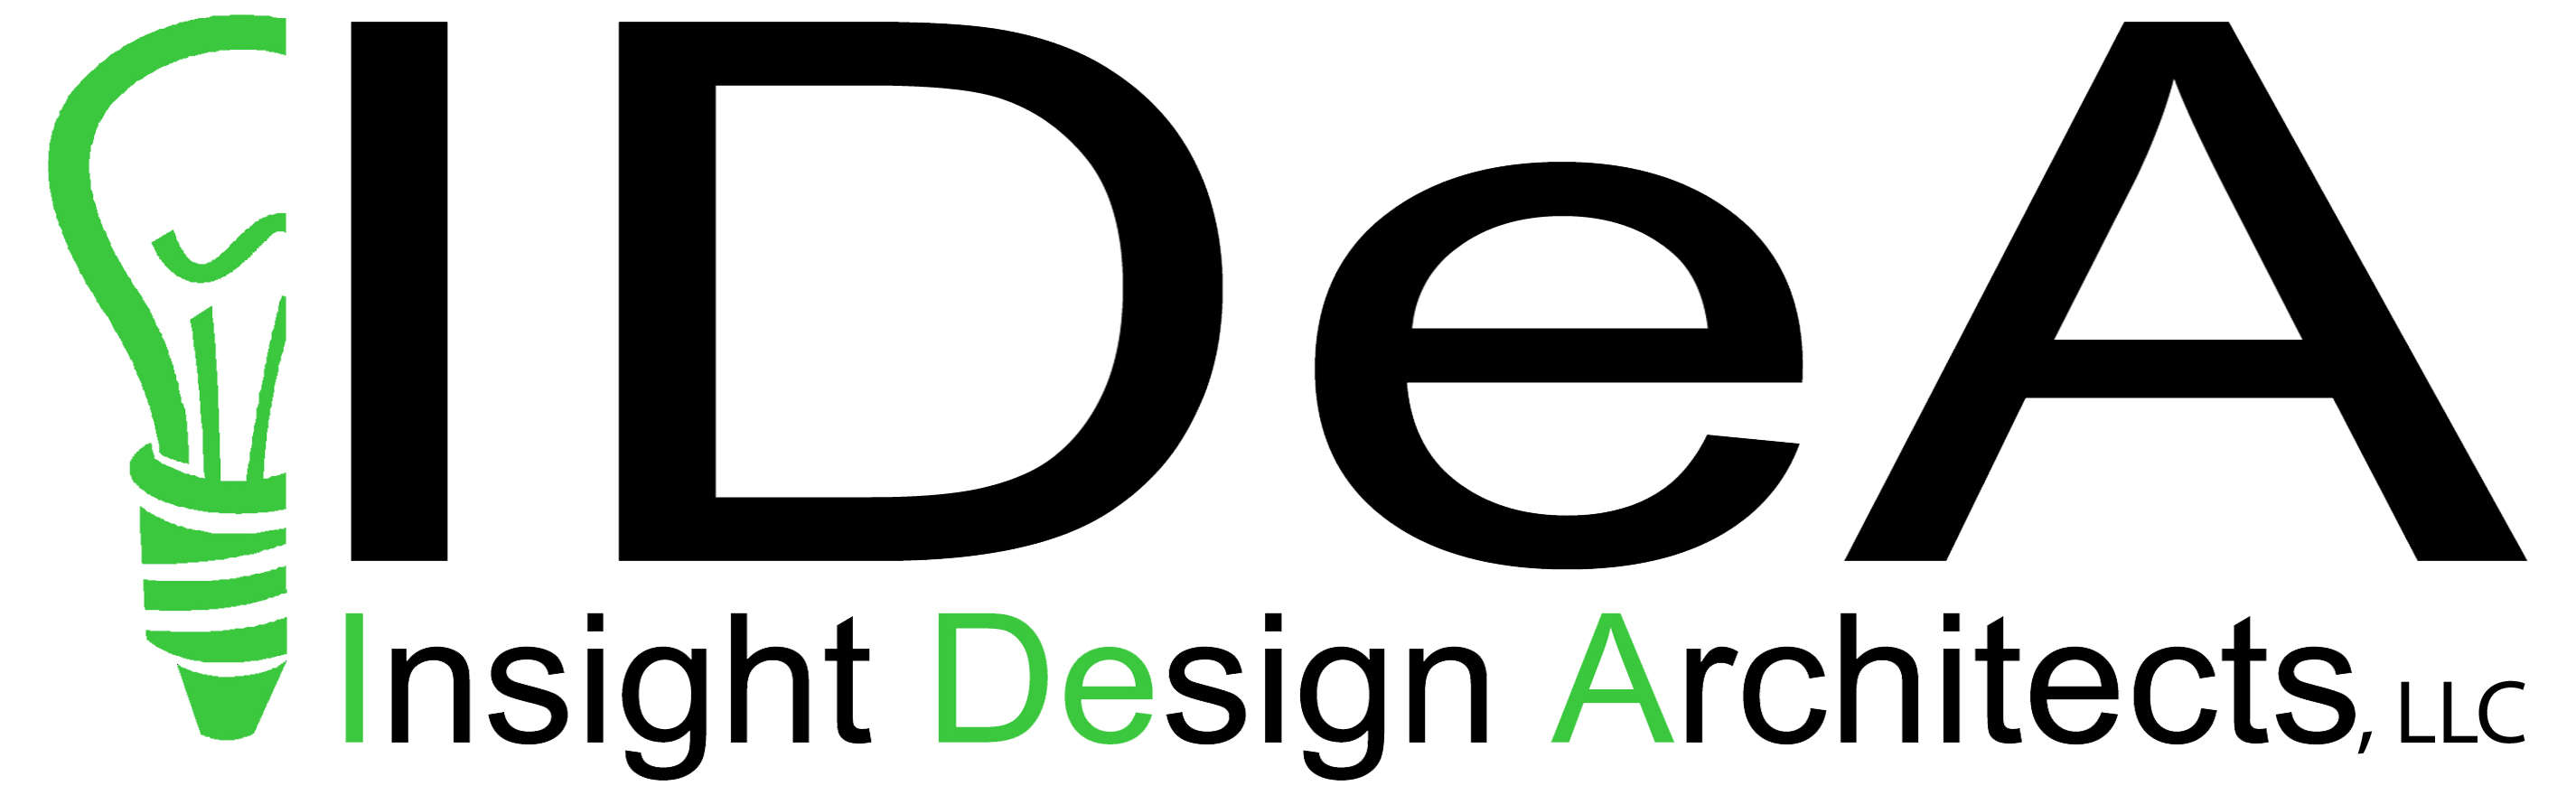 Insight Design Architects, LLC Logo